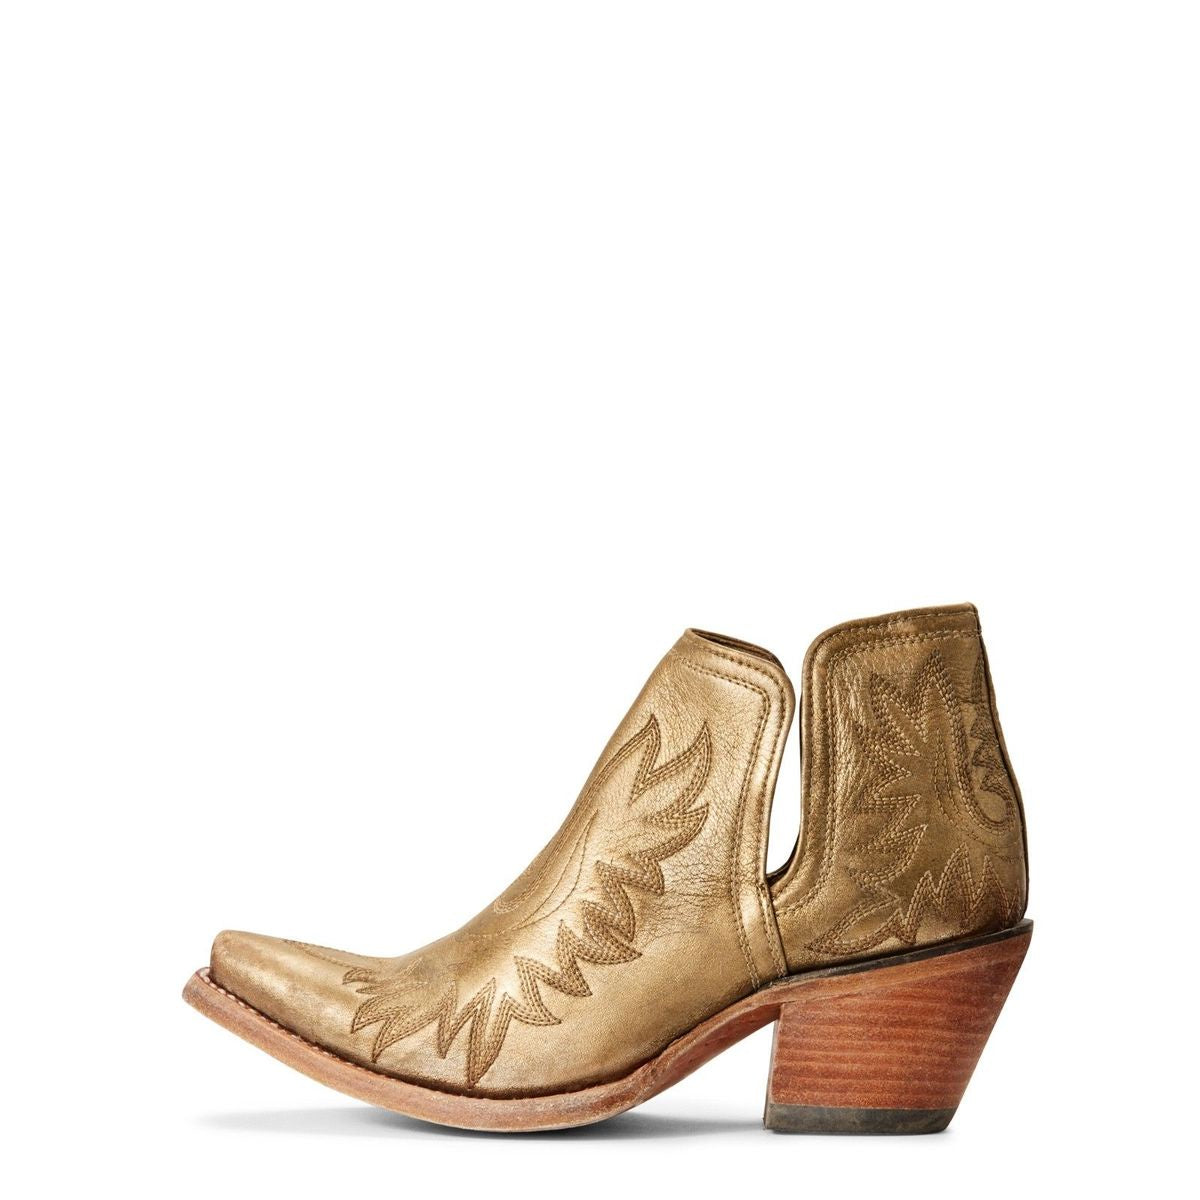 Women's Ariat Dixon Gold Boots